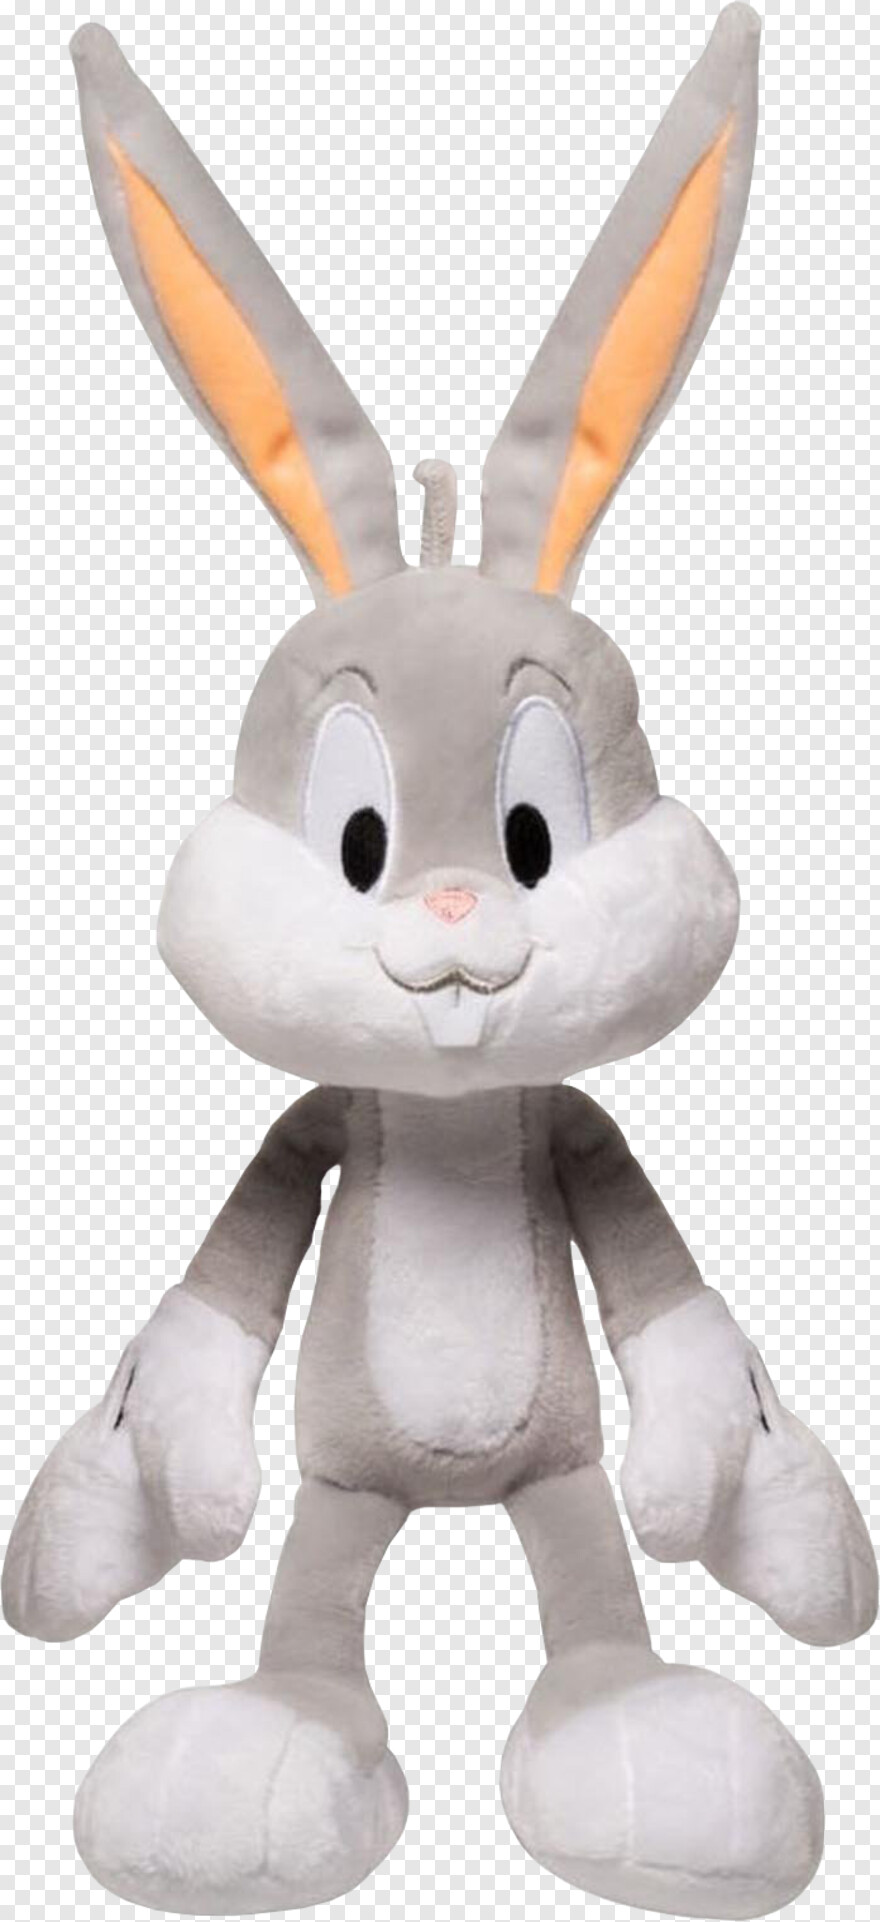  Bugs Bunny, Cute Bunny, 8 Bit Heart, Bunny Silhouette, 8 Bit Mario, Bunny